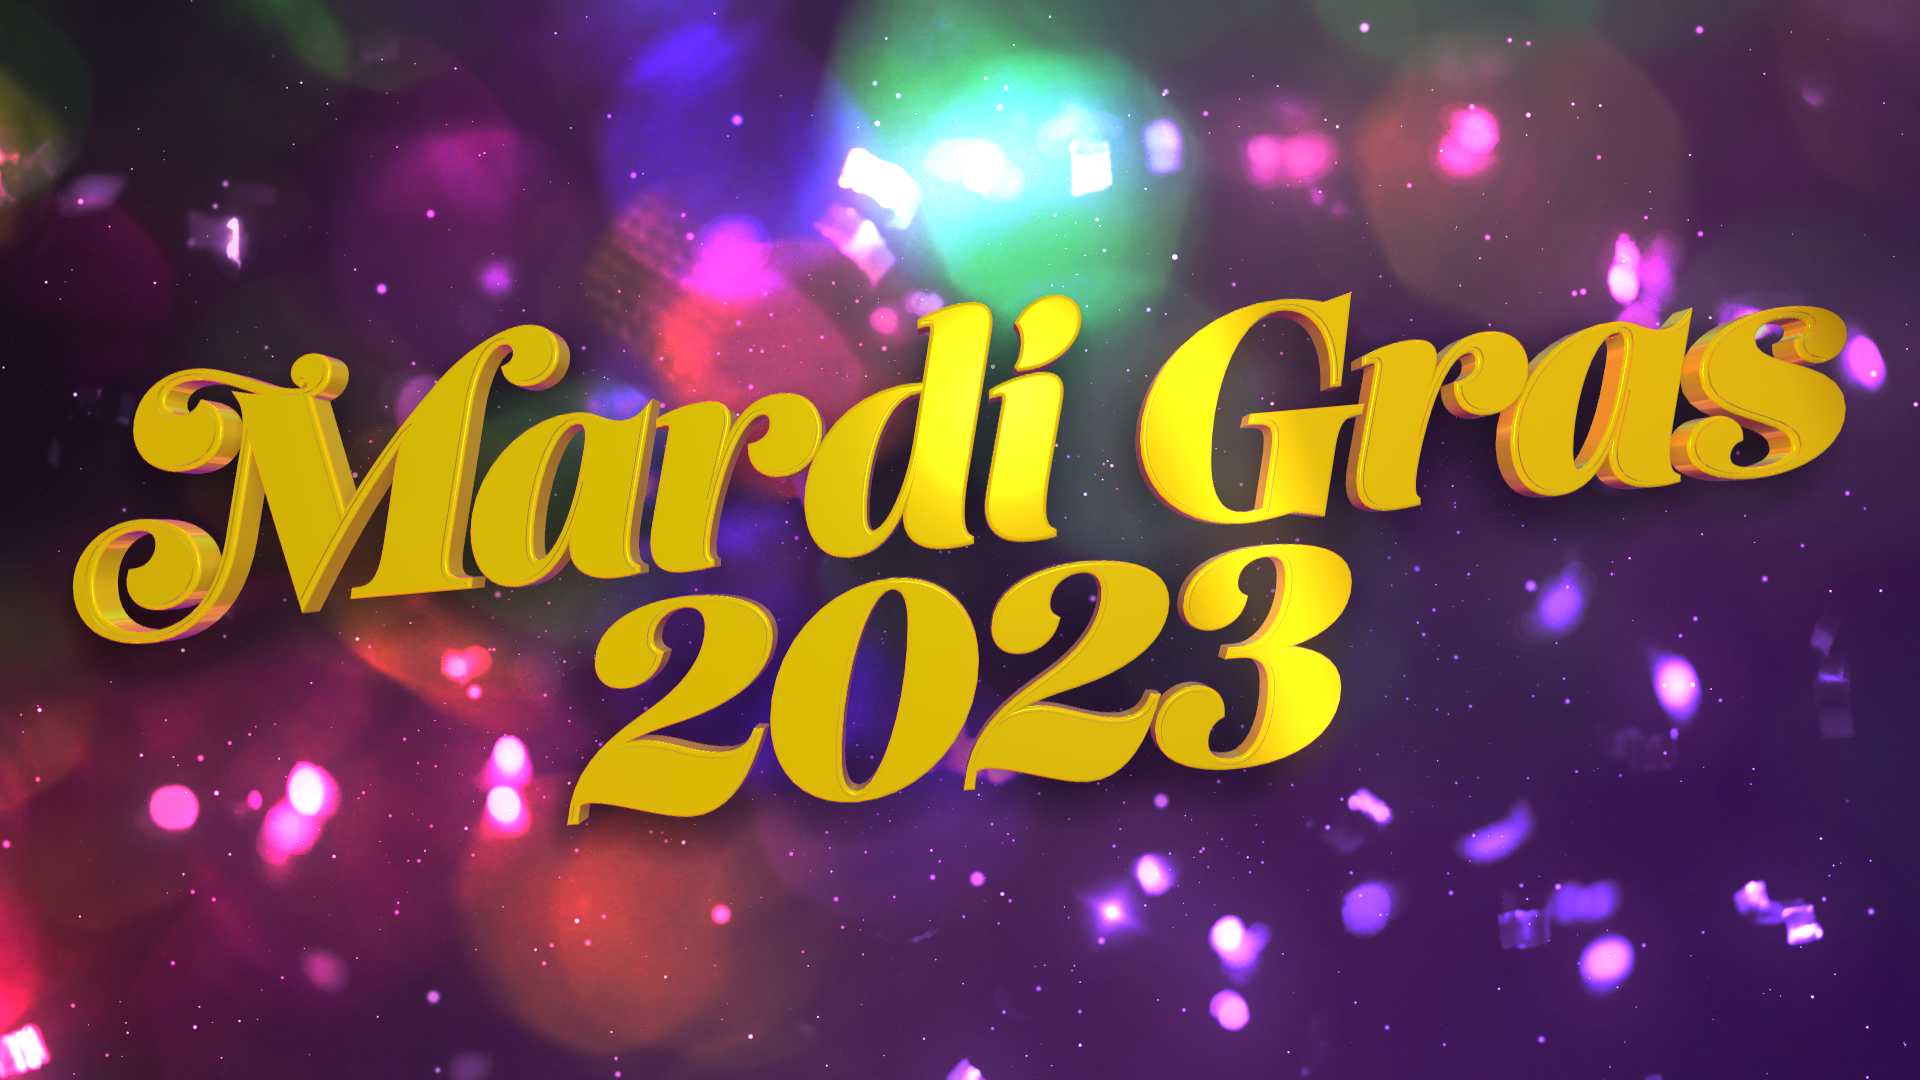 WATCH LIVE Mardi Gras 2023 coverage